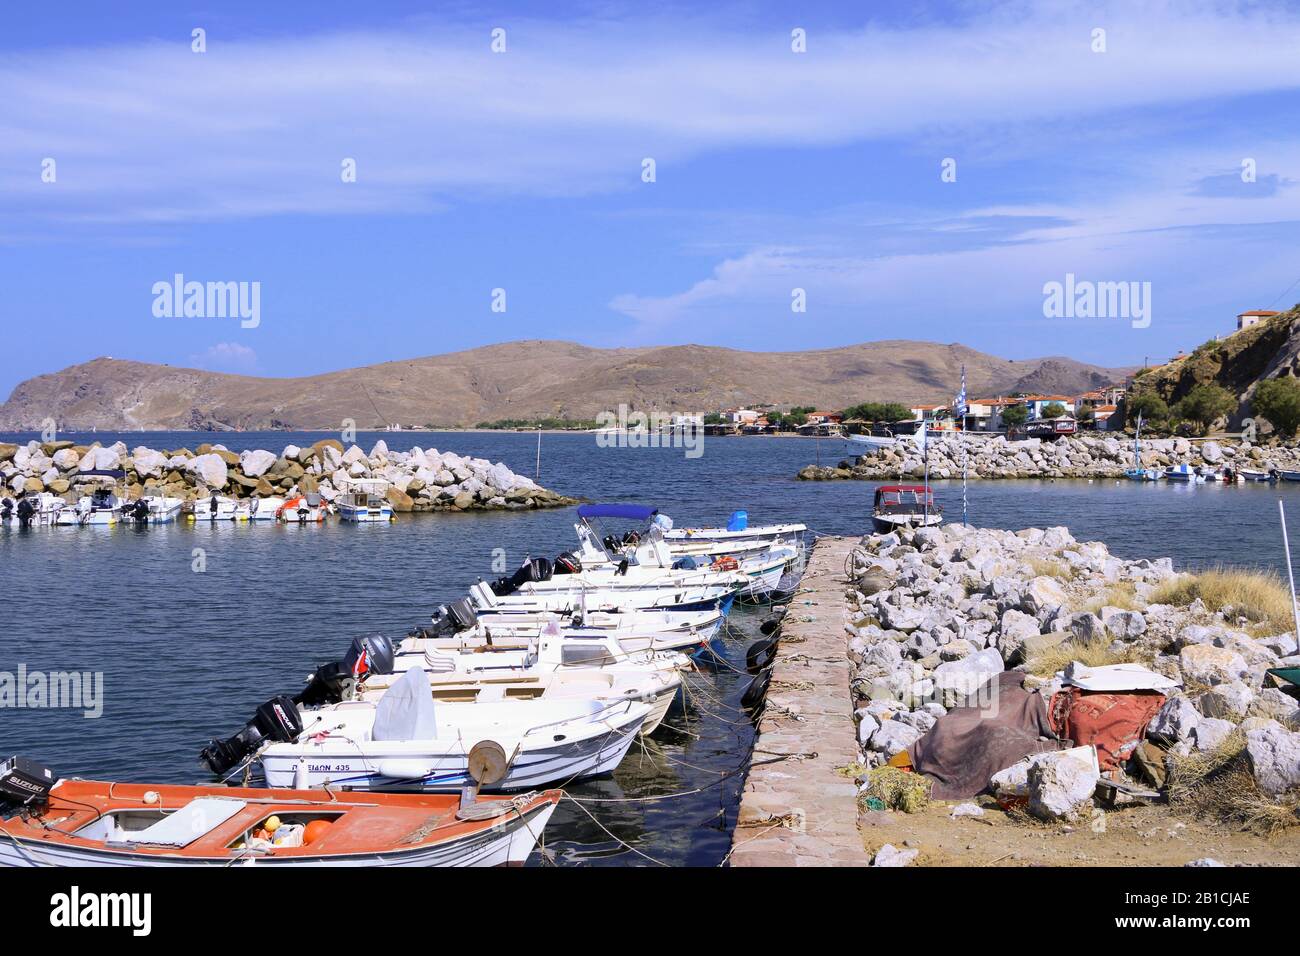 Skala Eressou, the small fishing port at the eastern edge of the coastal town of Skala Eressou, in Lesvos (Lesbos) island, Greece, Europe. Stock Photo